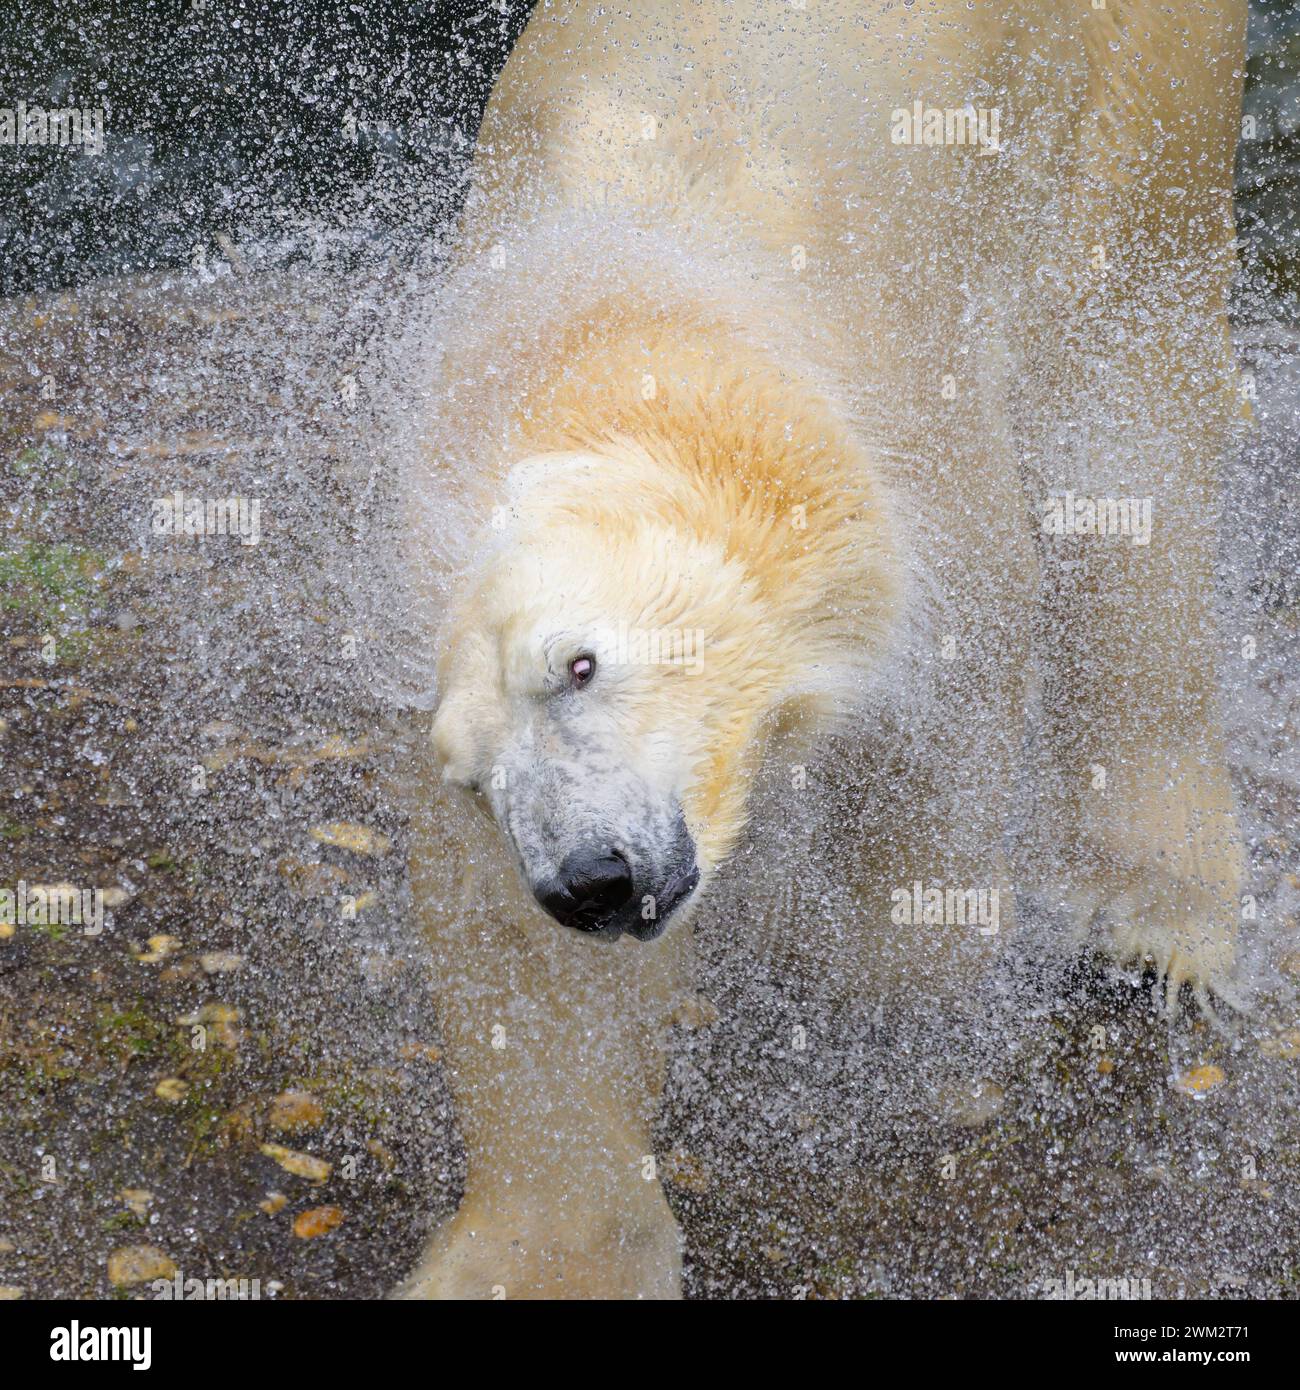 Portrait of a polar bear Ursus maritimus in the water in a zoo, splashing water Austria Stock Photo